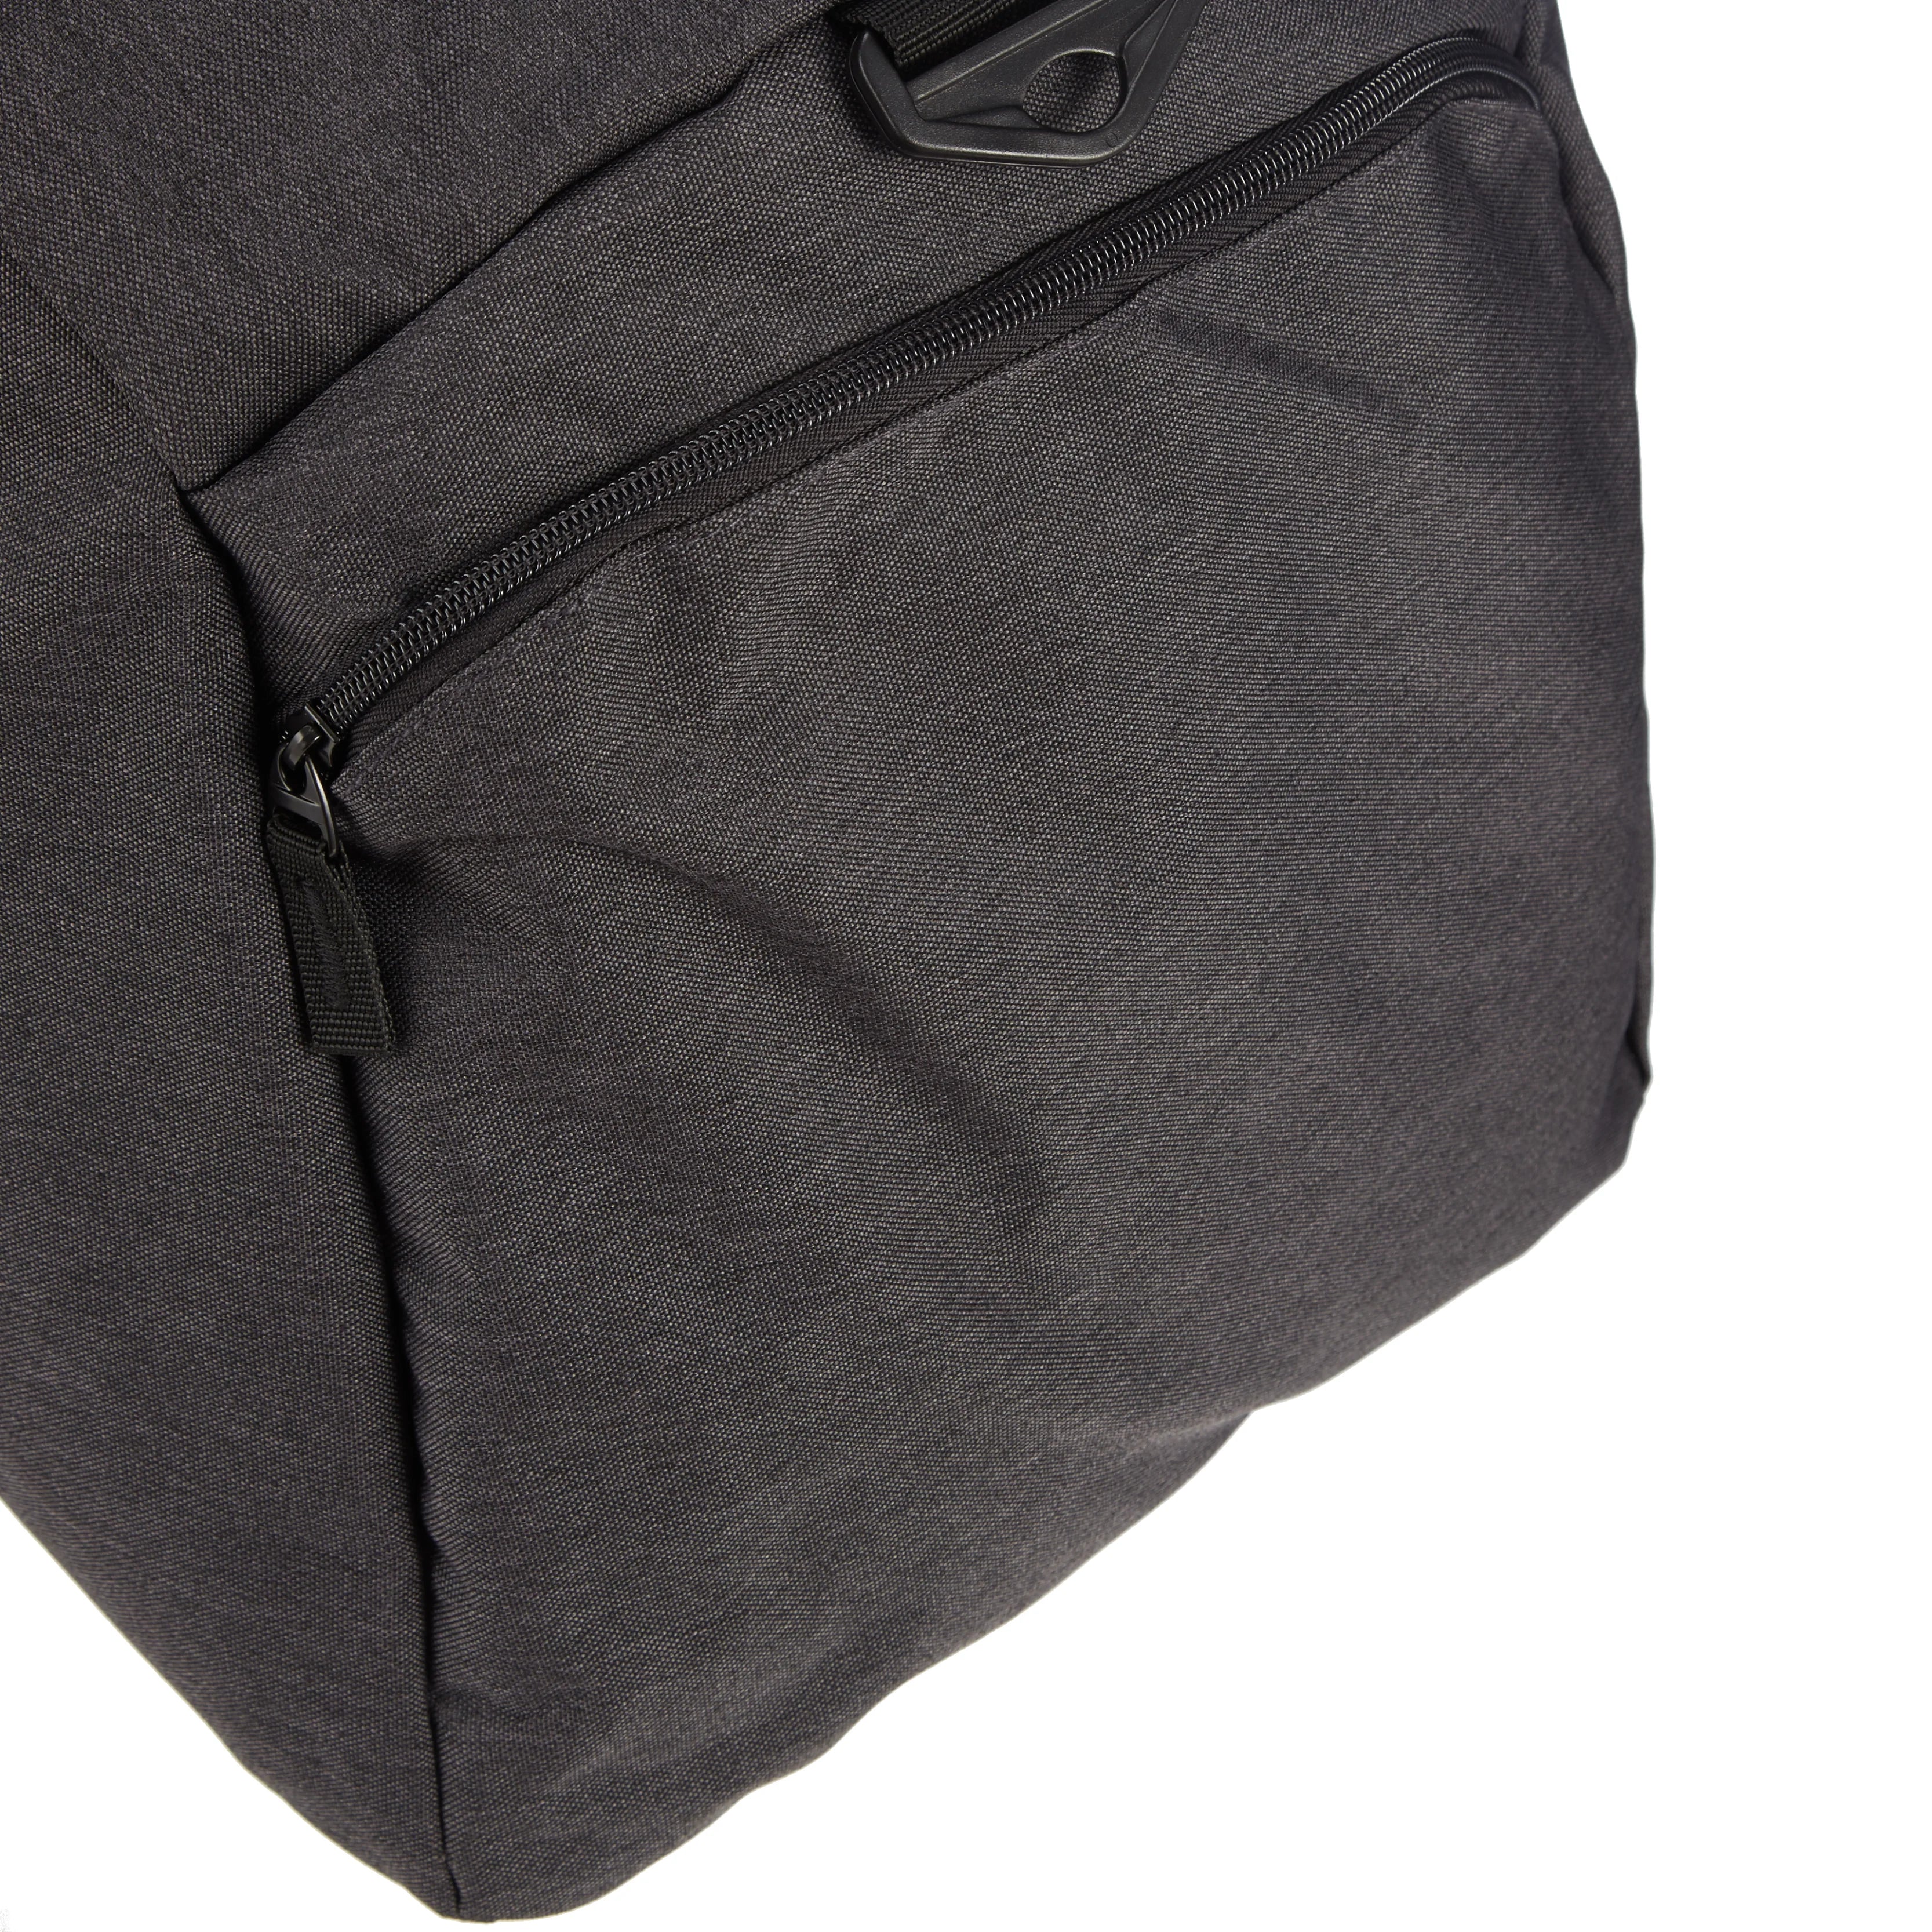 koffer-direkt.de Light Travel II Travel bag 50 cm - black